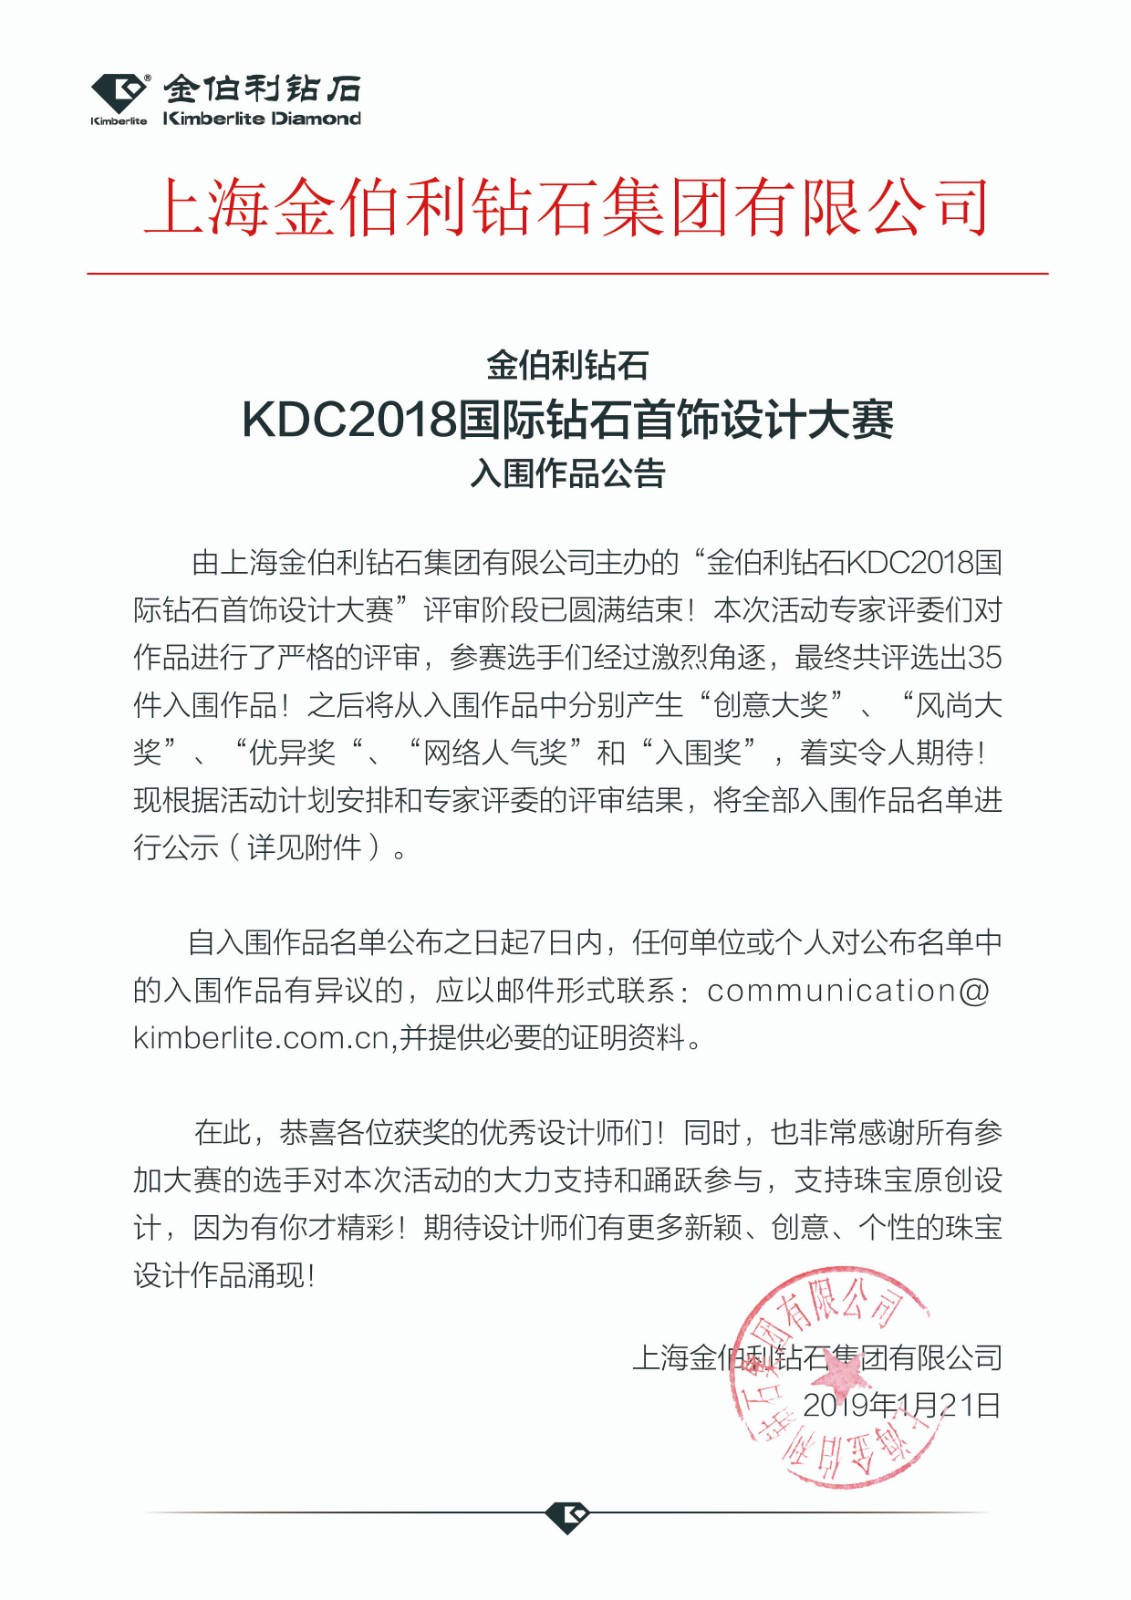 KDC2018國際鉆石首飾設計大賽入圍作品公告